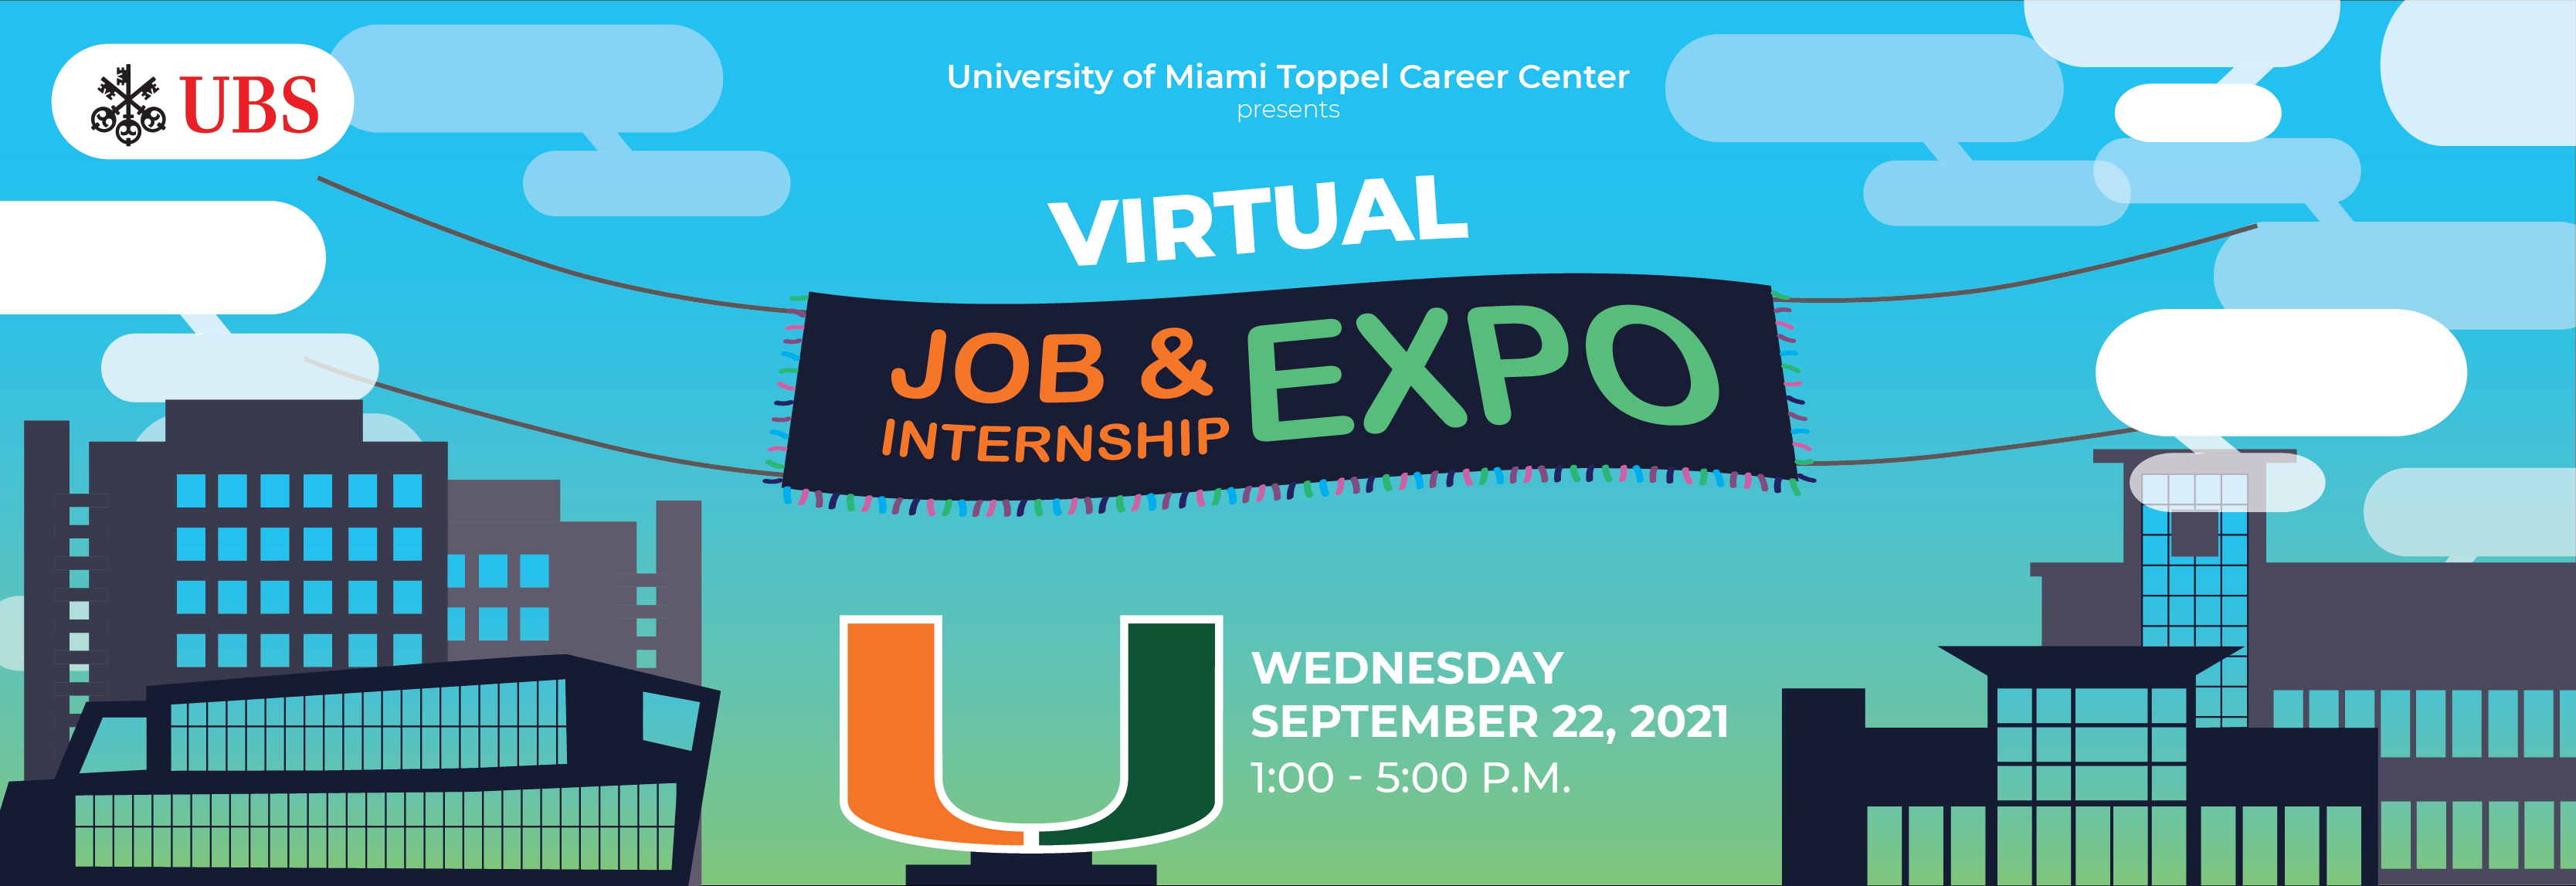 Toppel Career Center I University Of Miami